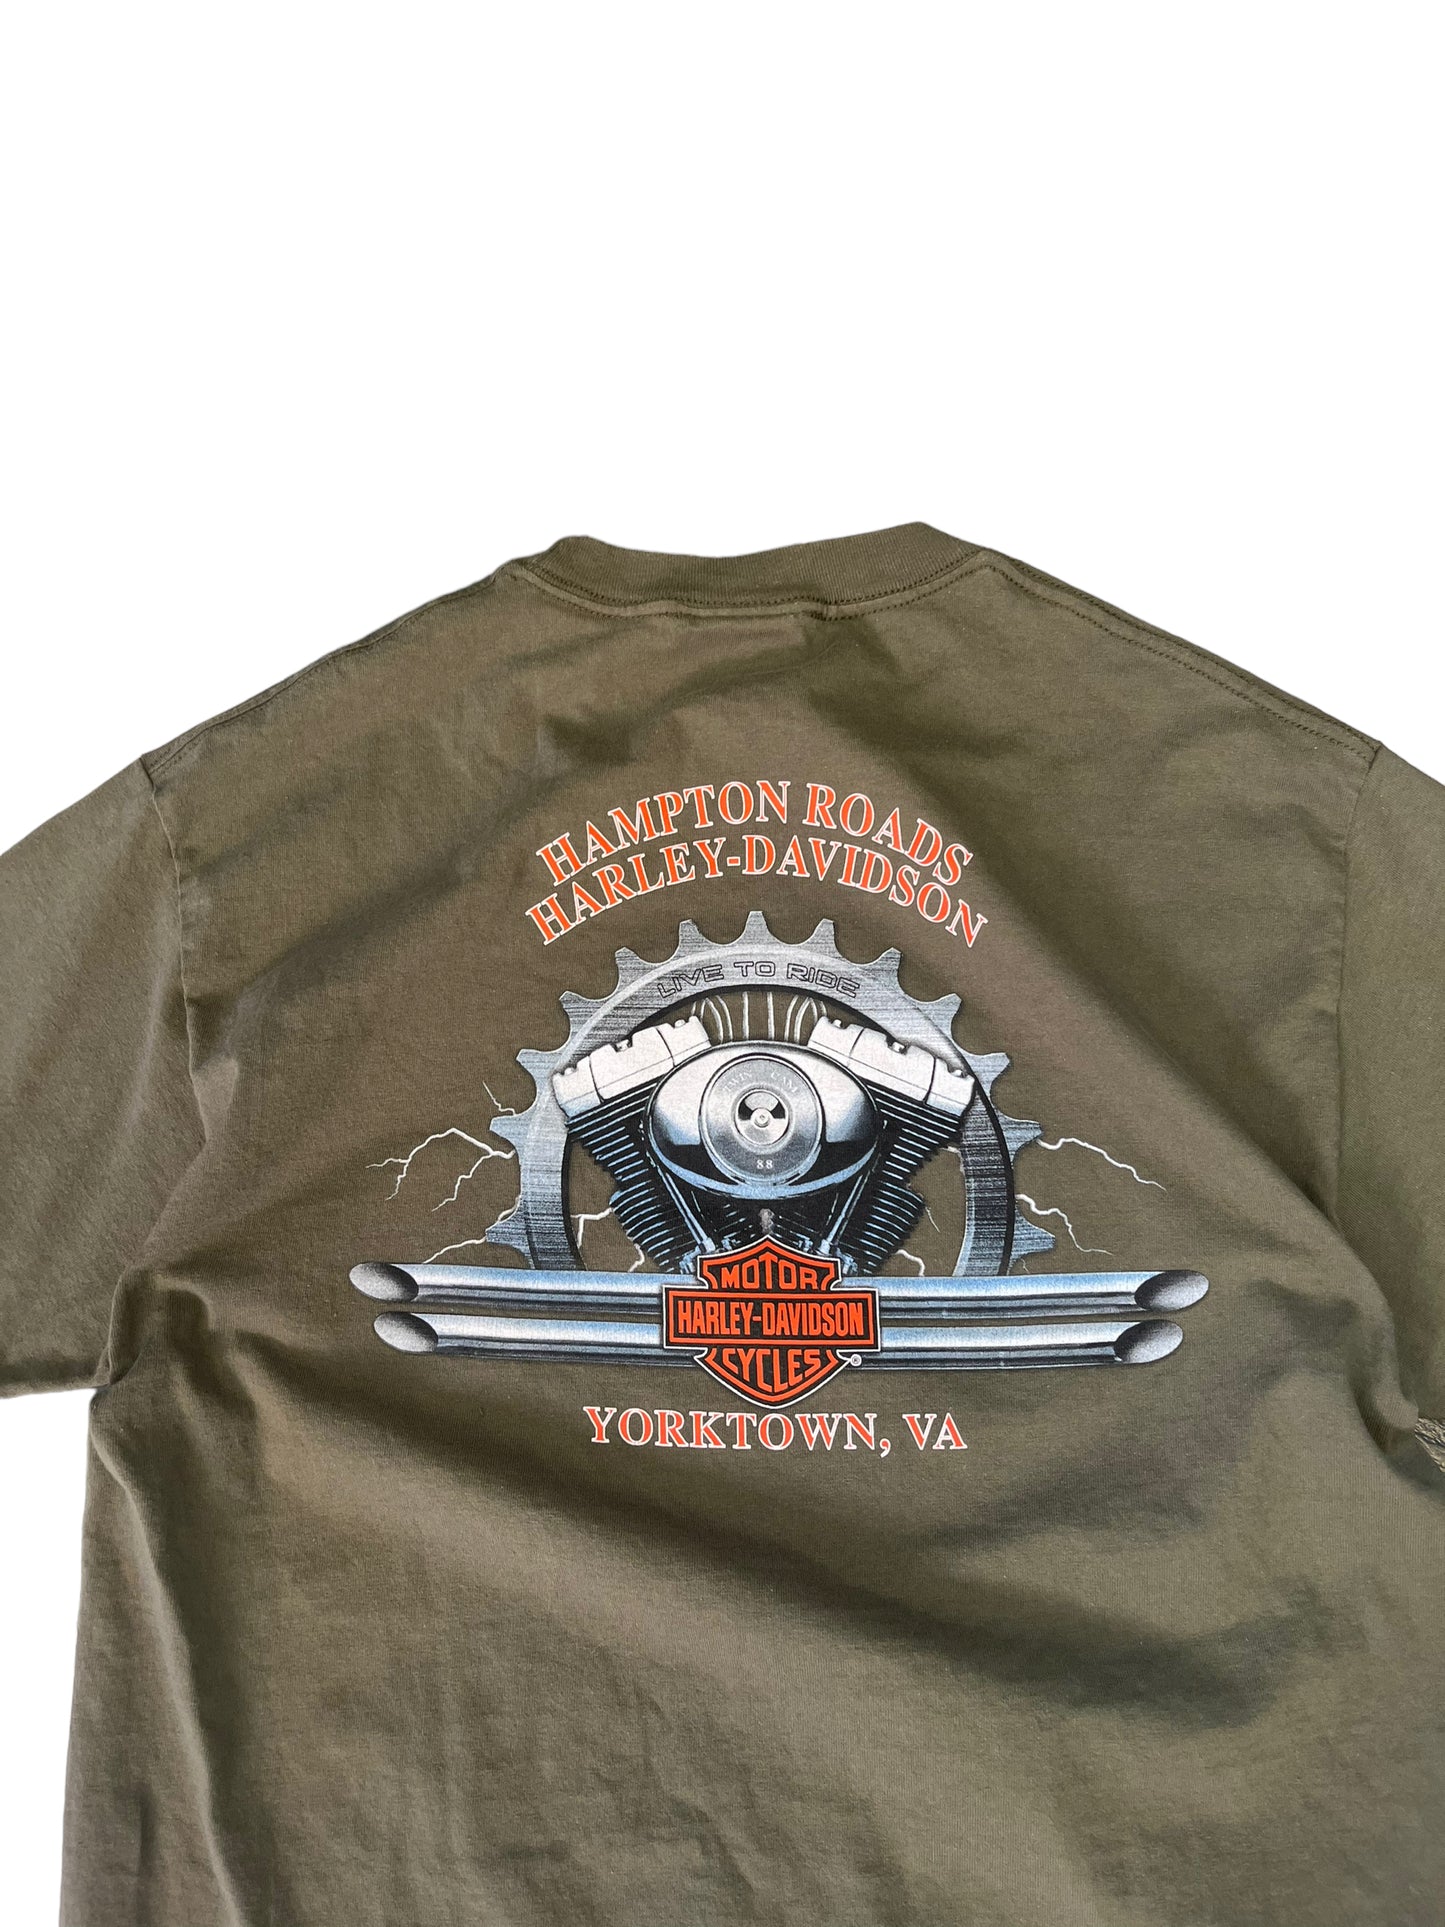 (L) 2003 Harley Davison Yorktown, VA Double Sided Tee